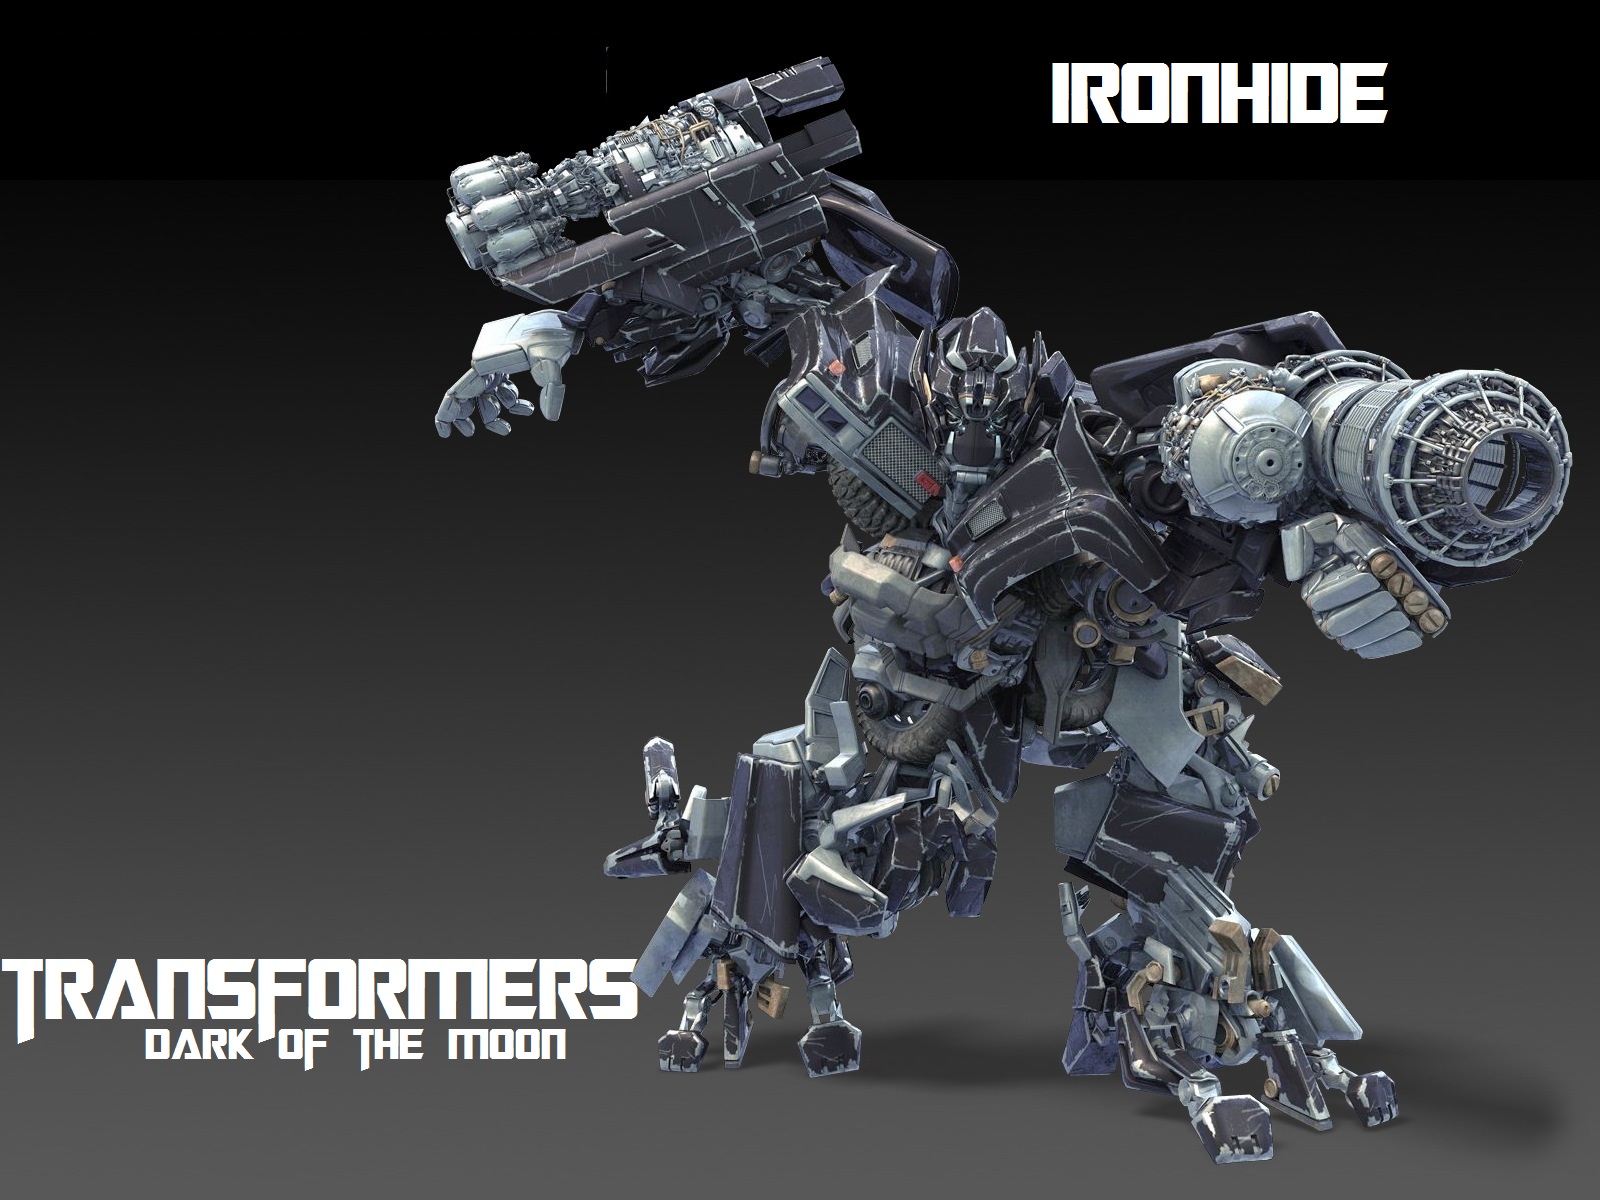 Transformers Ironhide Wallpaper Anim Gallery